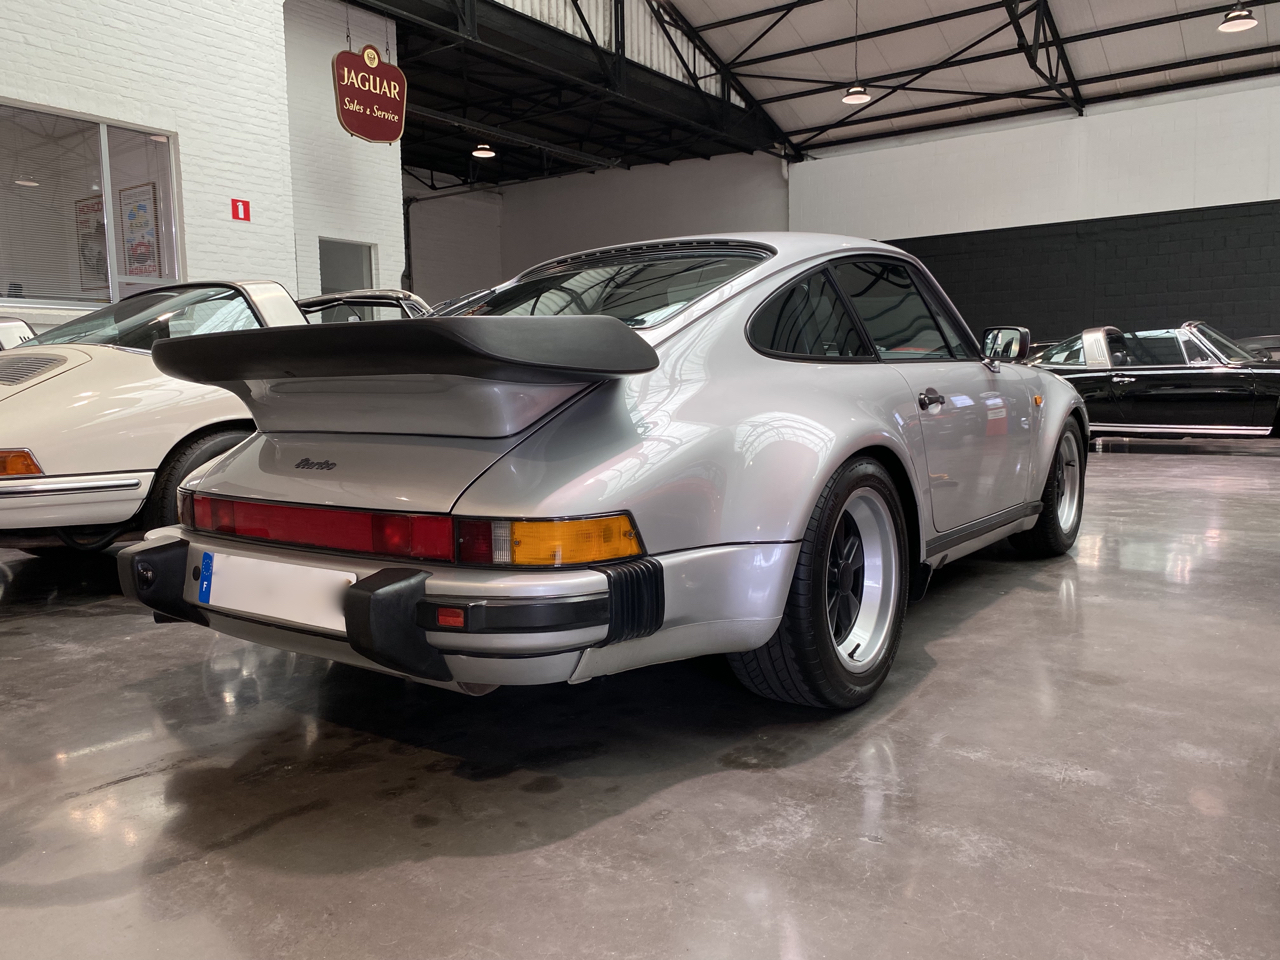 youngtimer.one - Porsche 911 turbo - Silver metallic - 1987 - 4 of 4